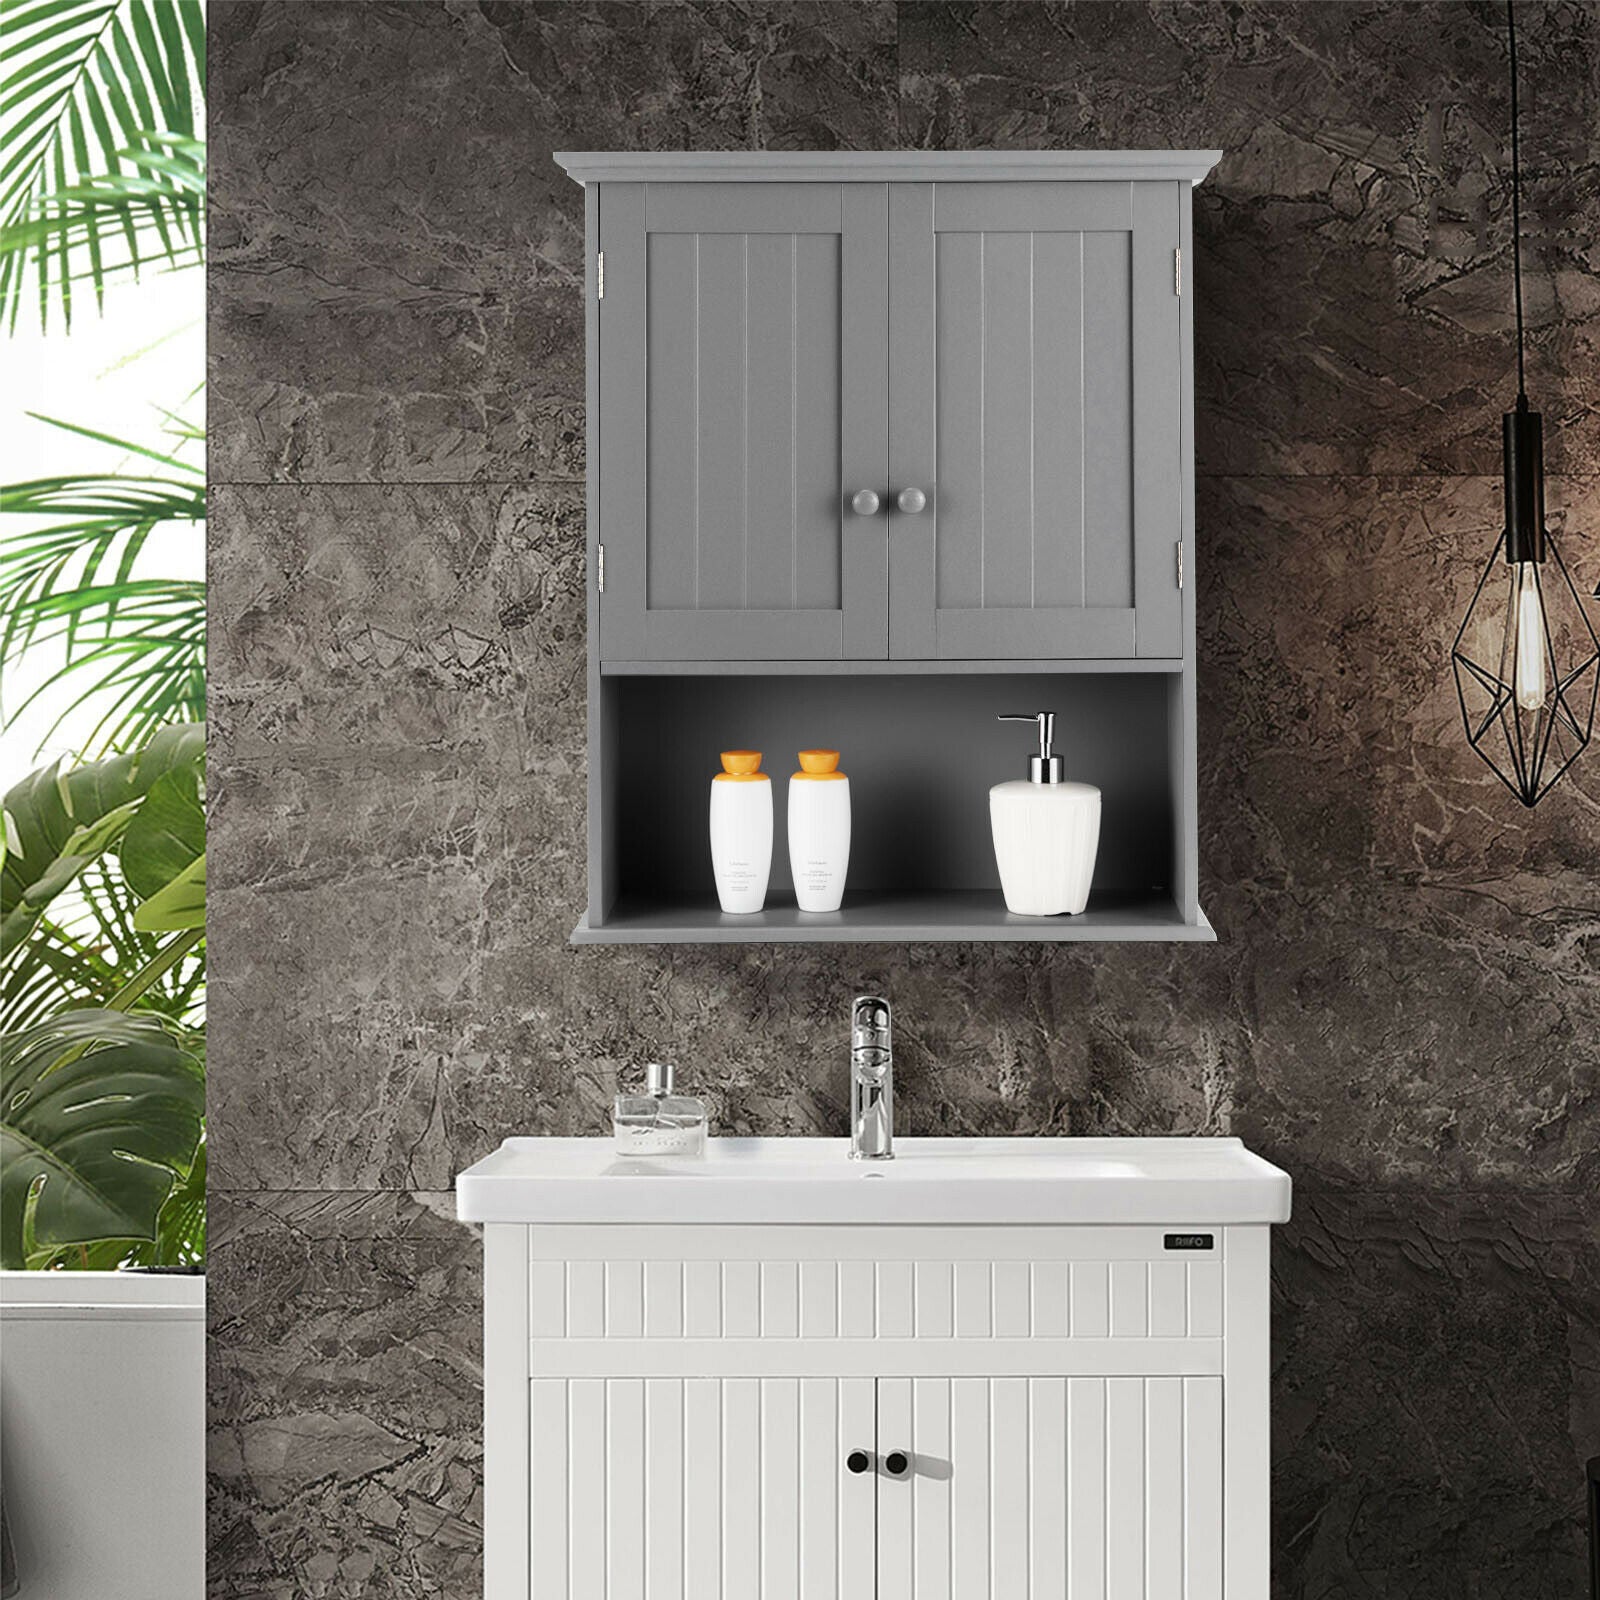 Wall Mounted Bathroom Storage Cabinet with Adjustable Shelf-Grey